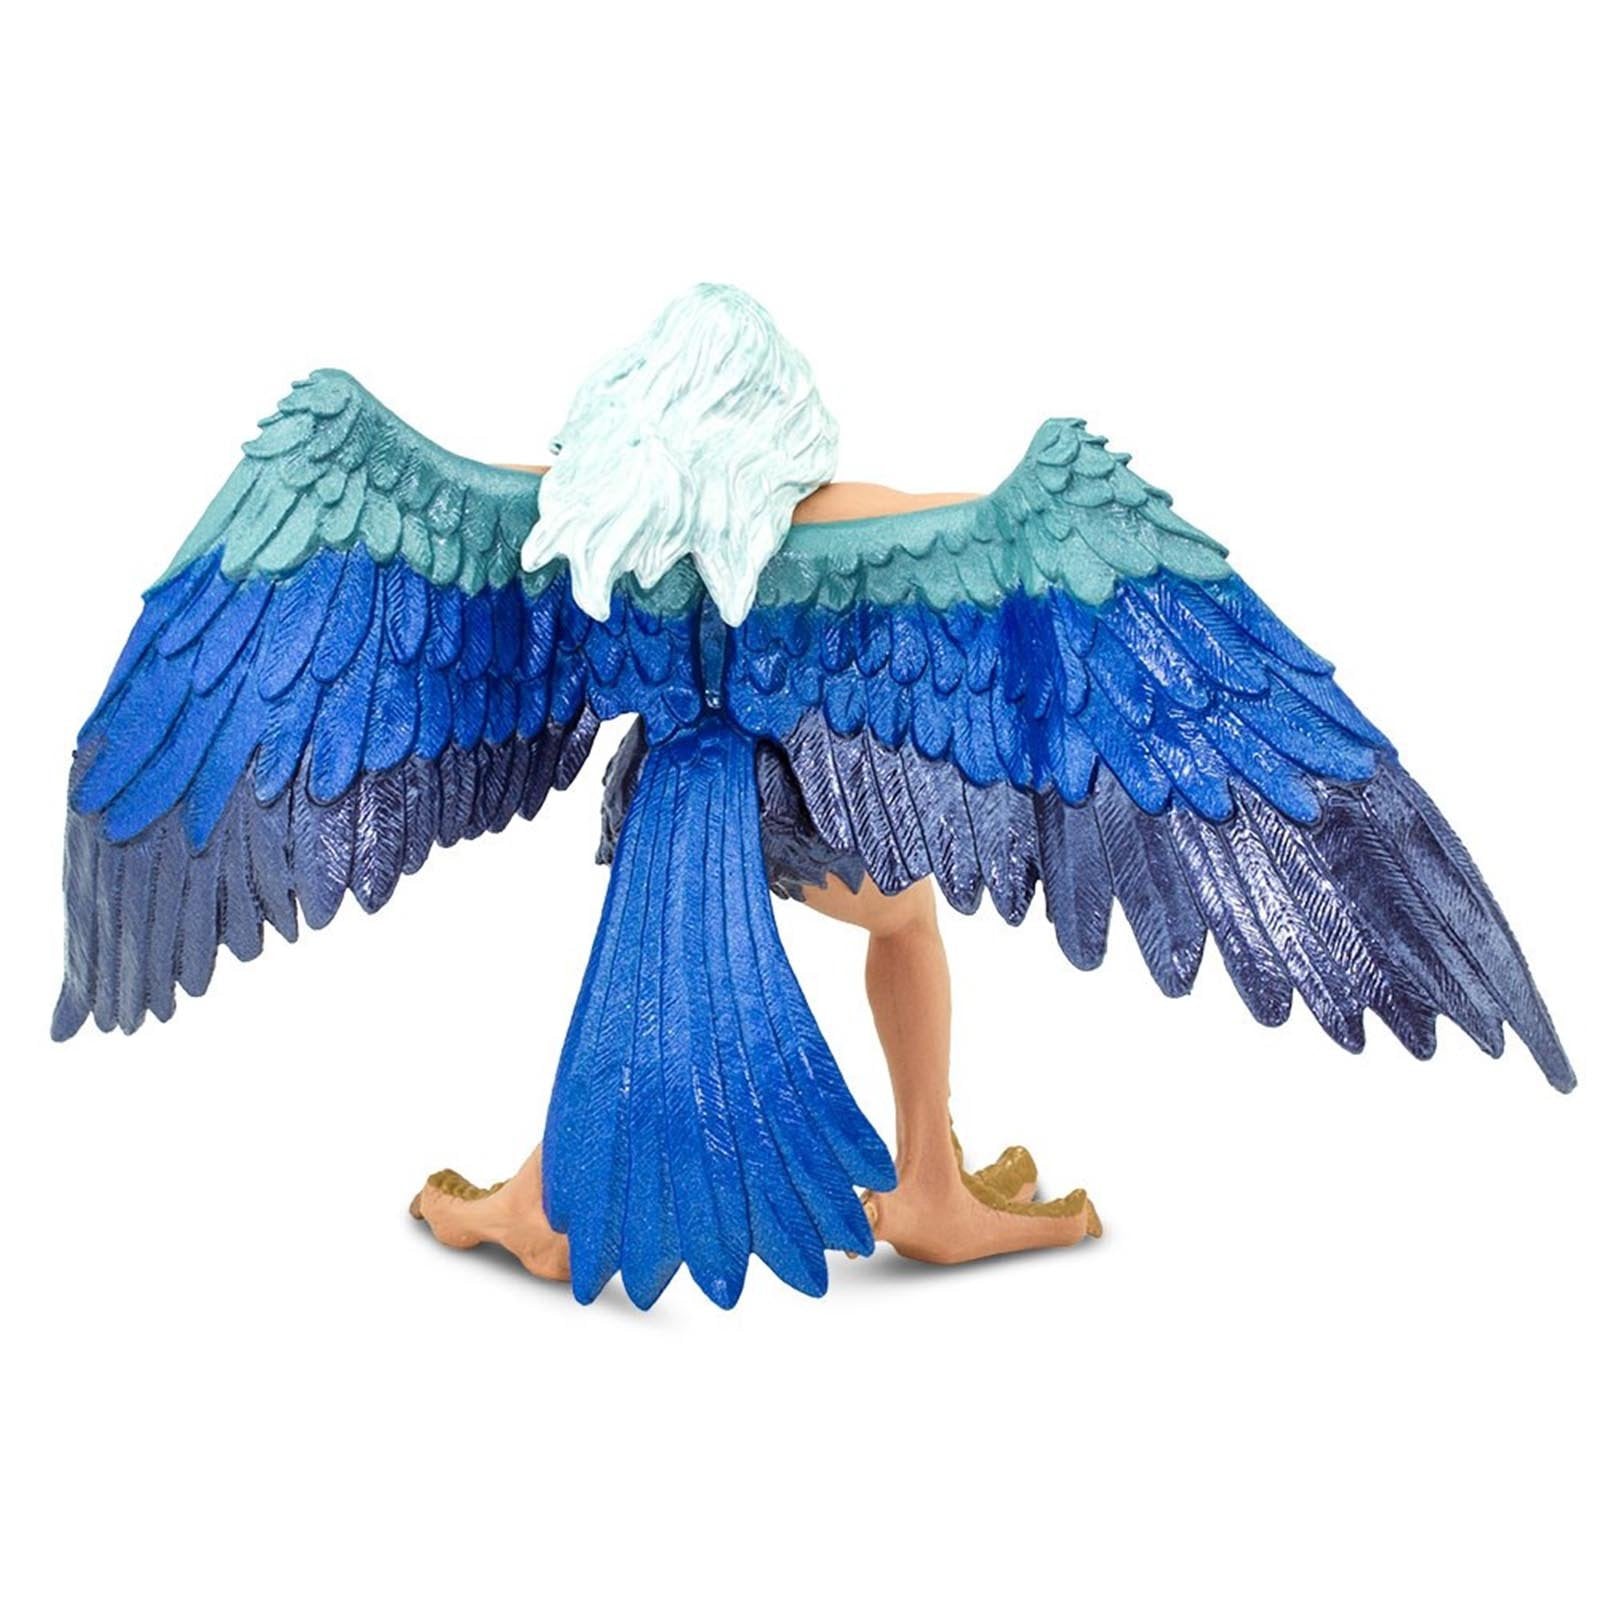 Harpy Mythical Creatures Figure Safari Ltd | Radar Toys